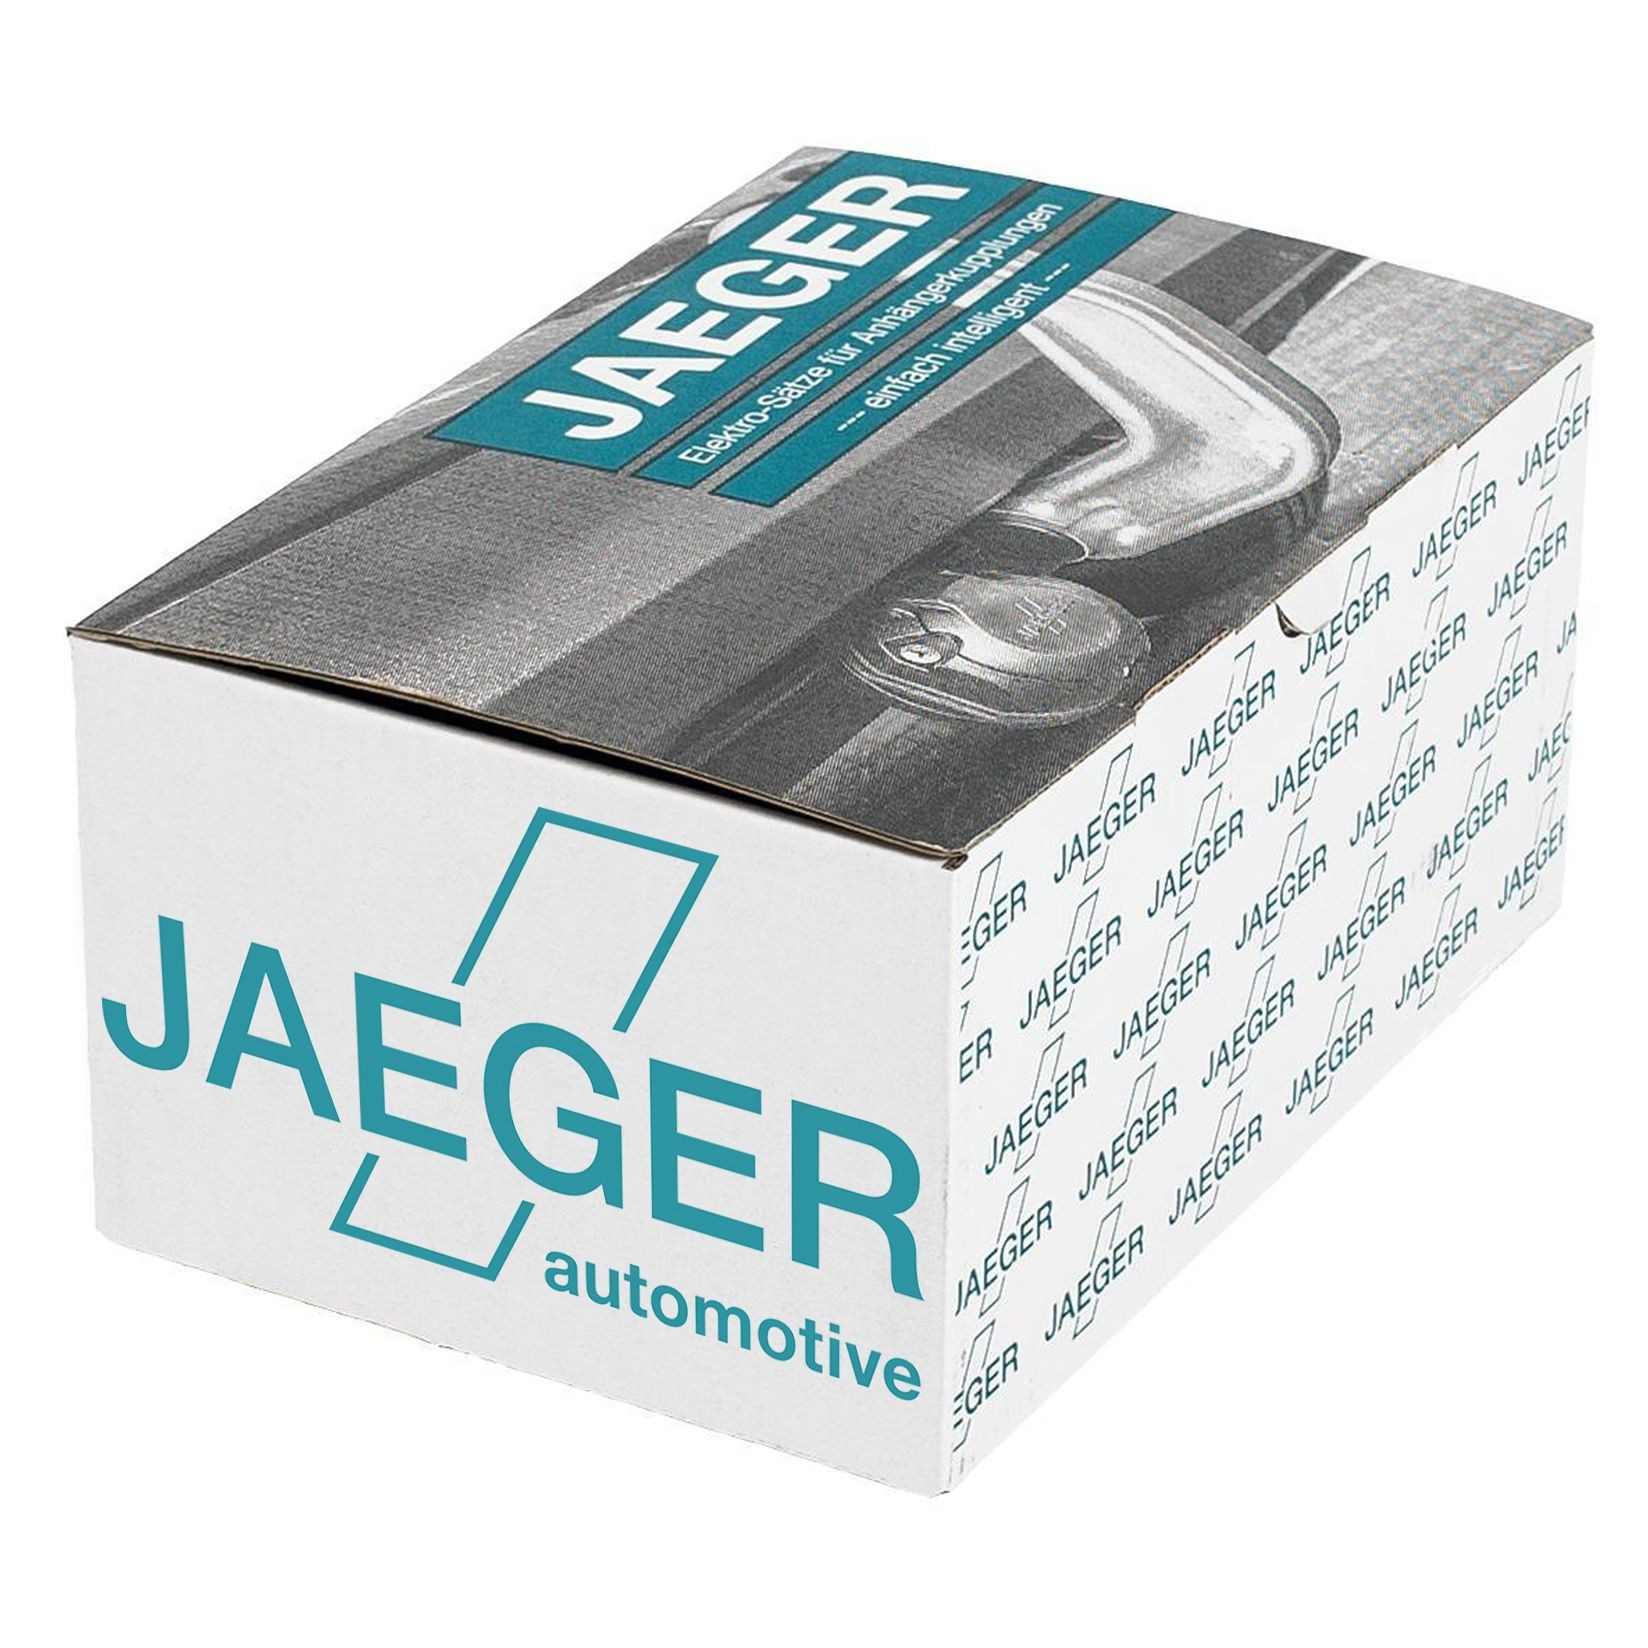 BMW X3 Trailer hitch parts - Towbar electric kit JAEGER 21020154